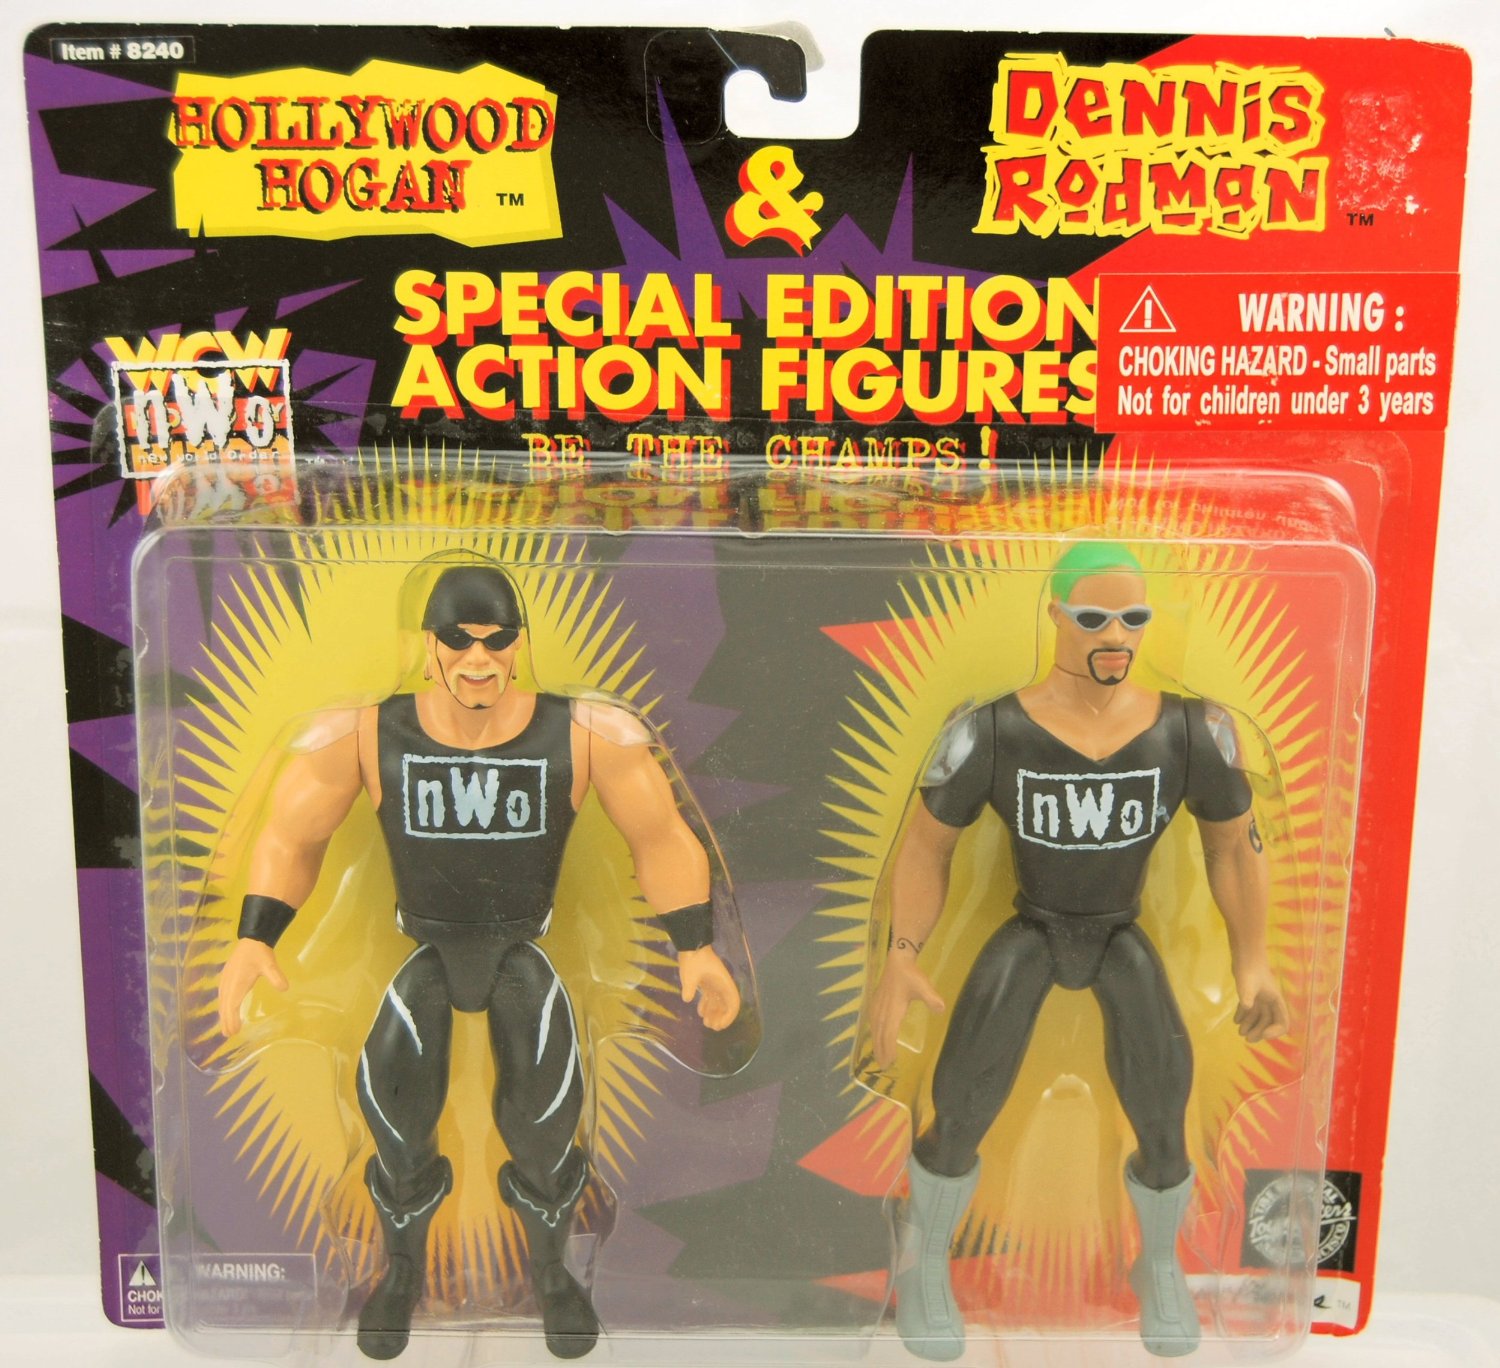 WCW NWO Dennis Rodman and Hollywood Hogan figures